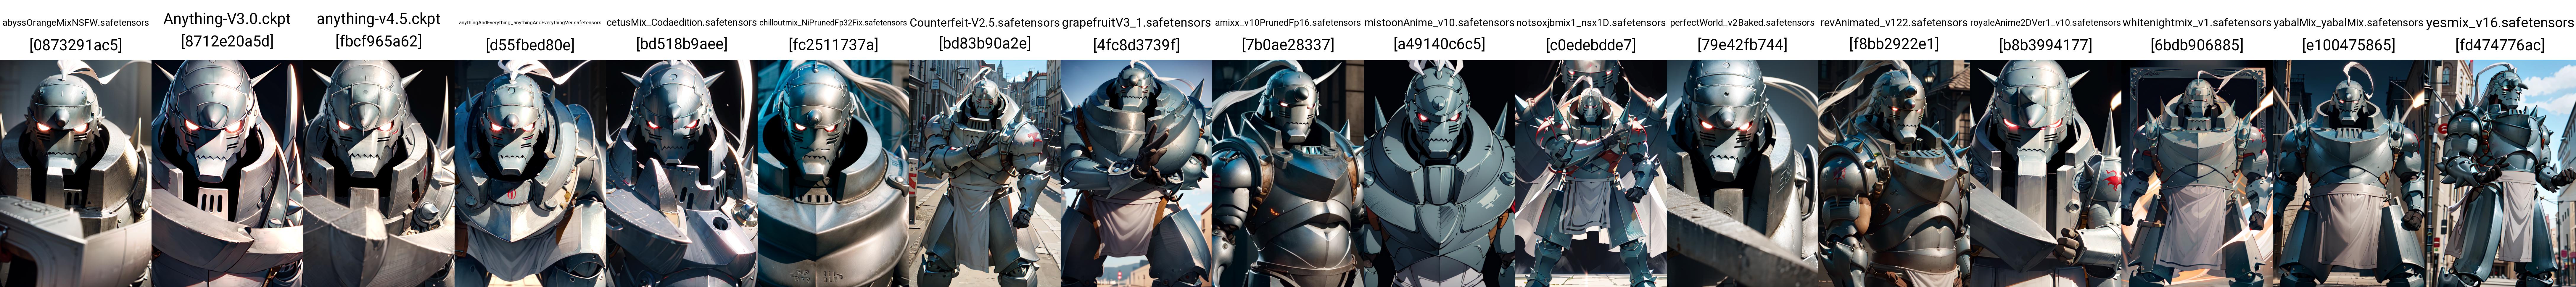 Alphonse Elric (Armor) (Fullmetal Alchemist) image by Jaimao